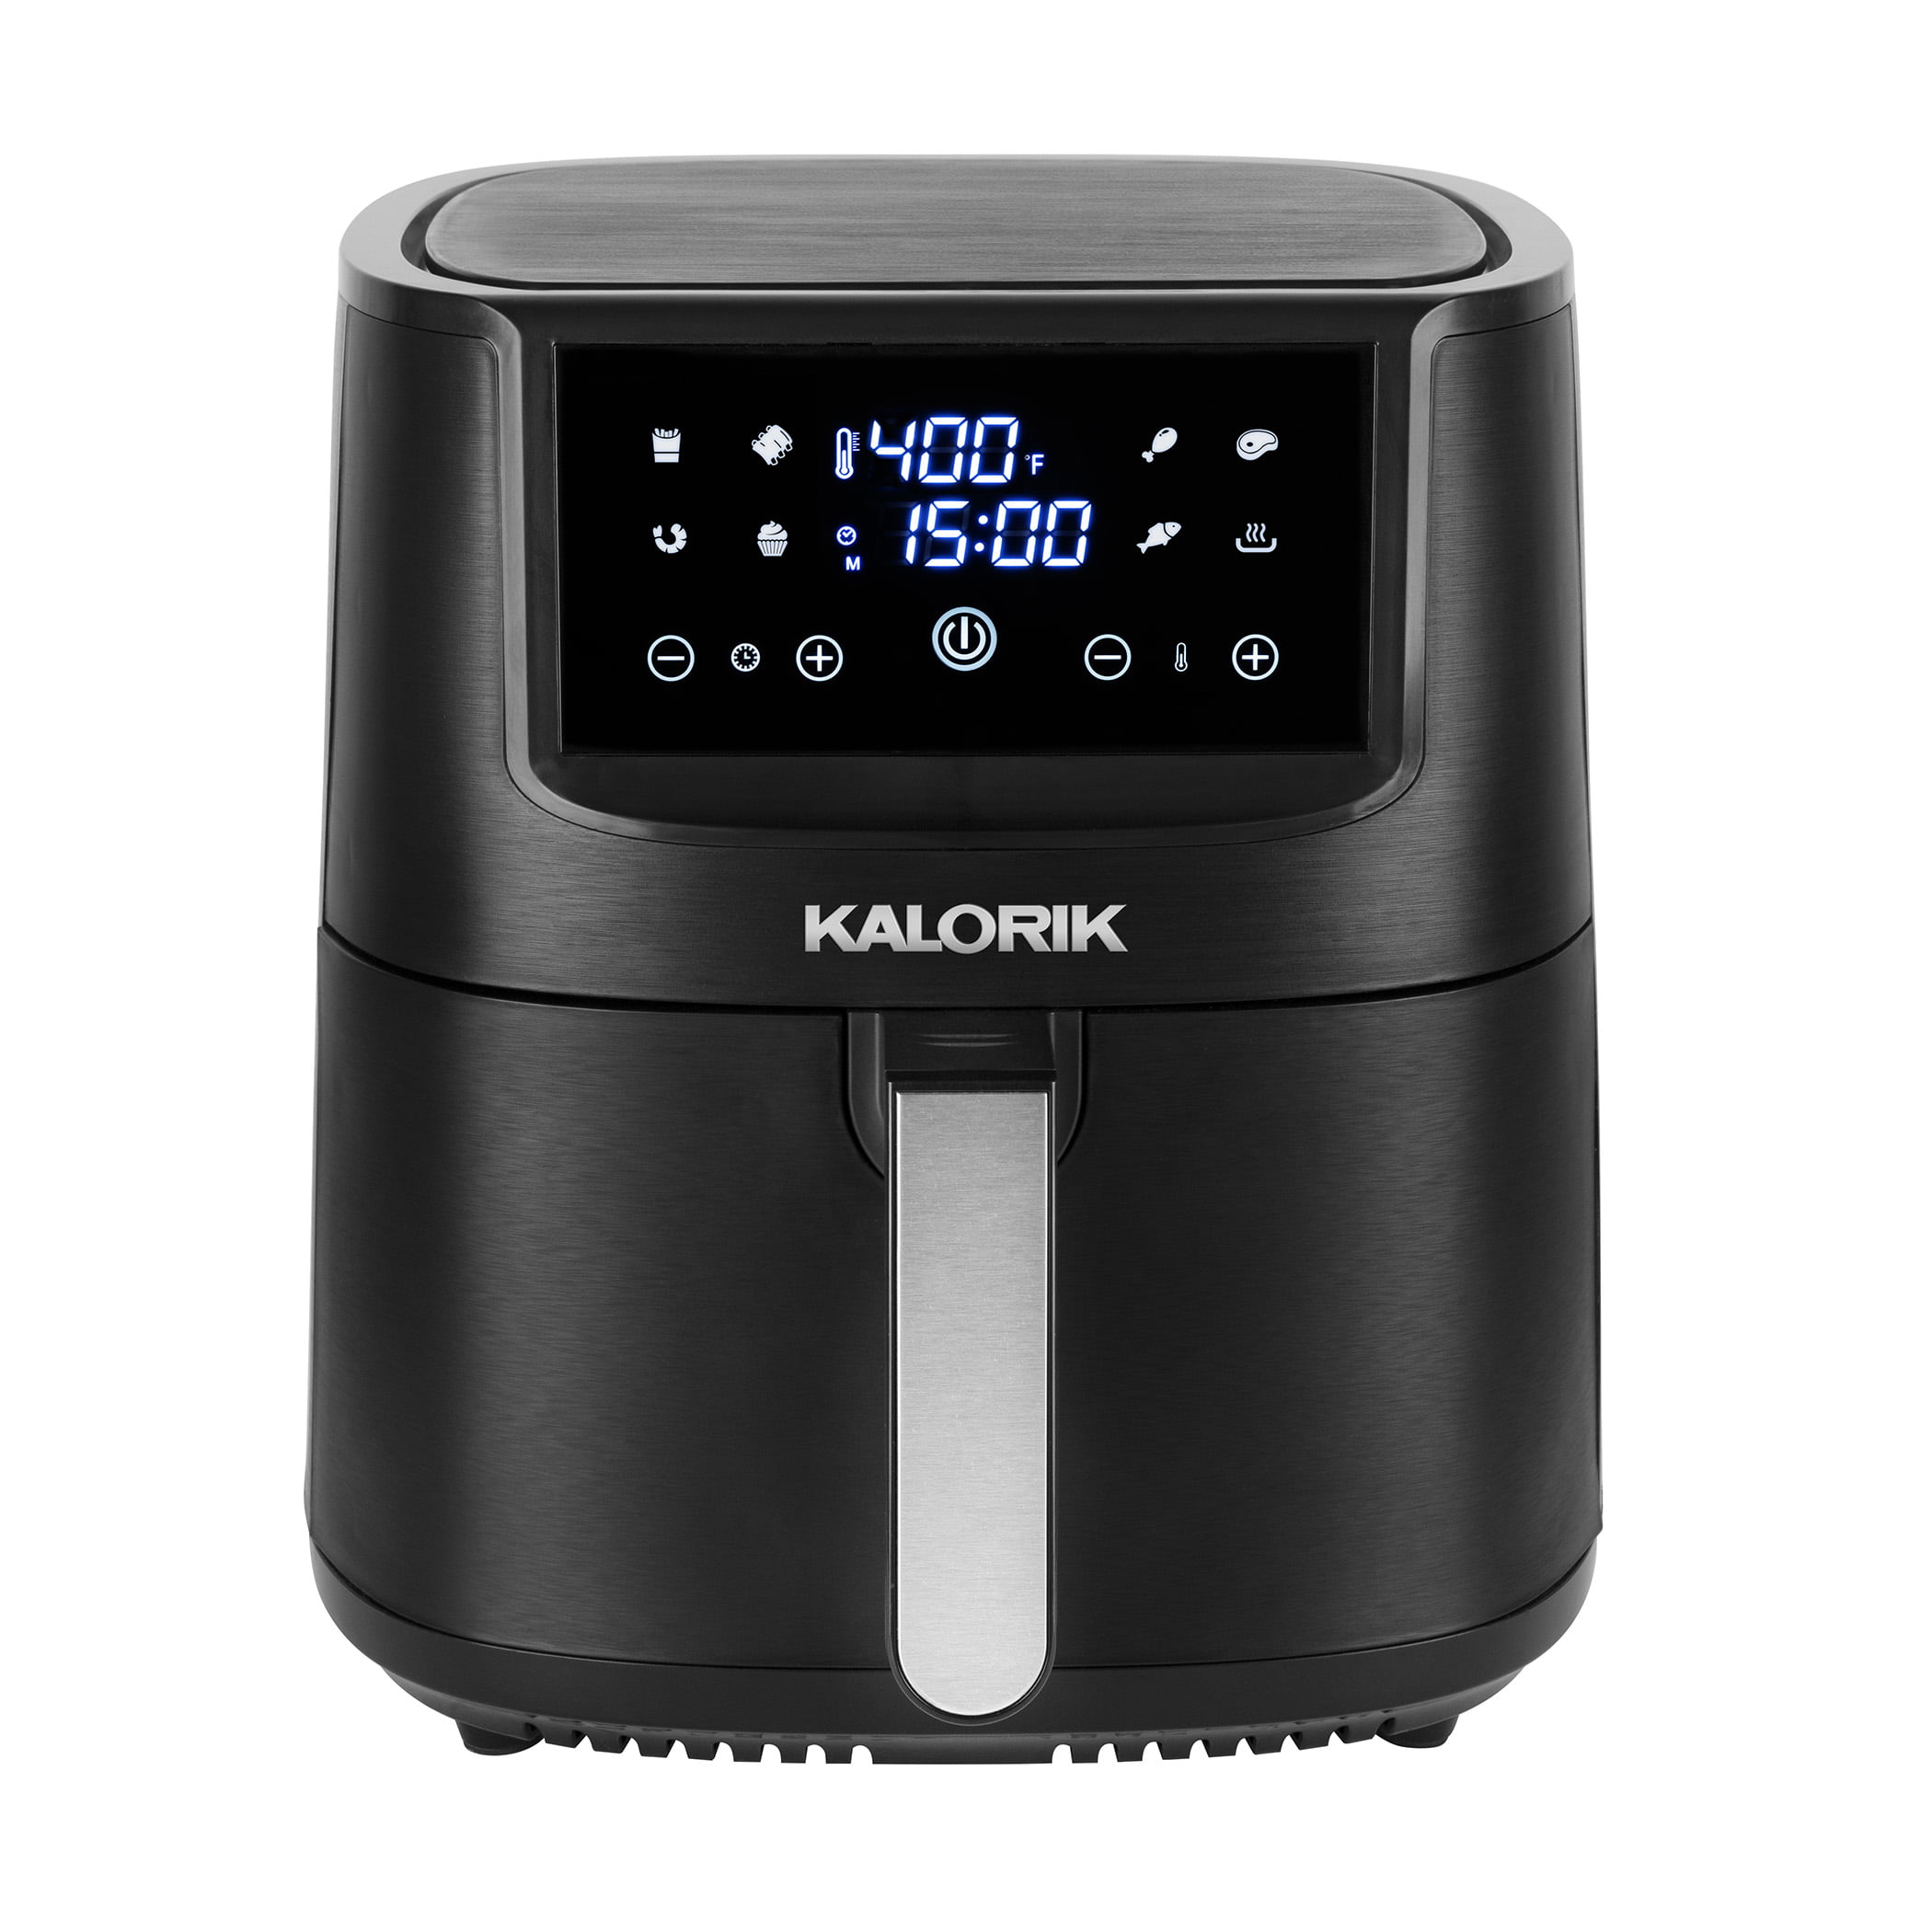 Kalorik® 8 Qt Digital Touchscreen Air Fryer with Trivet, Black FT 51503 BK $49